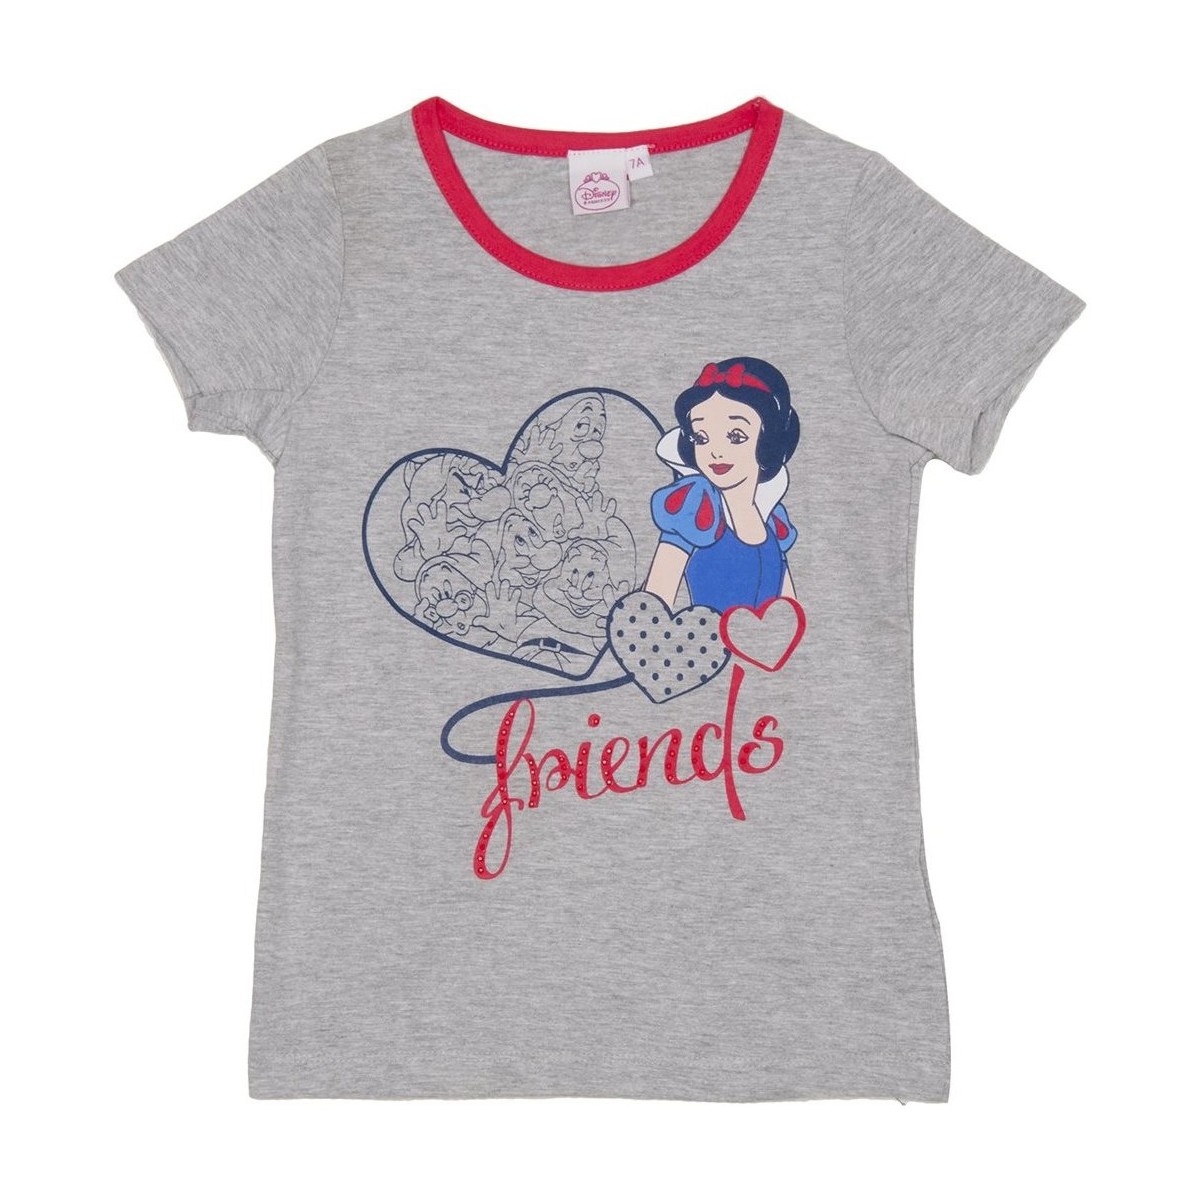 Kleidung Mädchen T-Shirts Disney WD26121-GRIS Grau